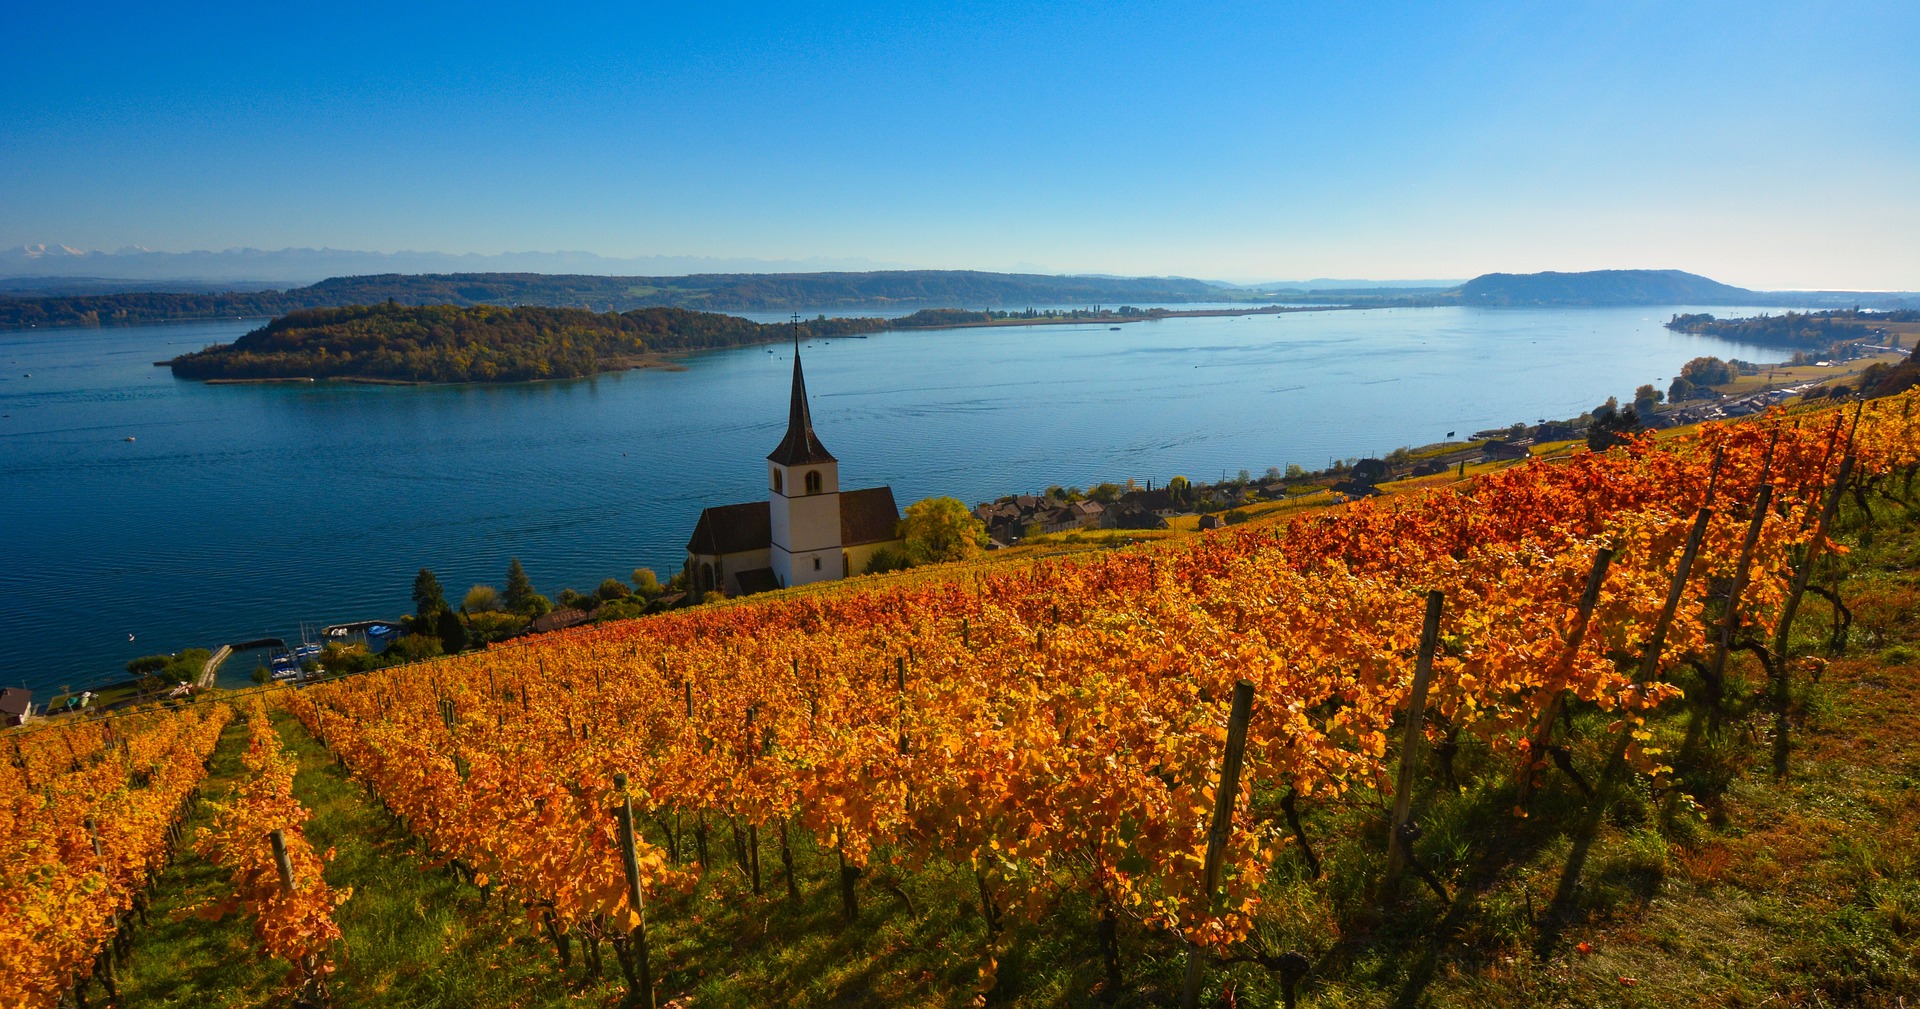 Exploring the vineyards Switzerland